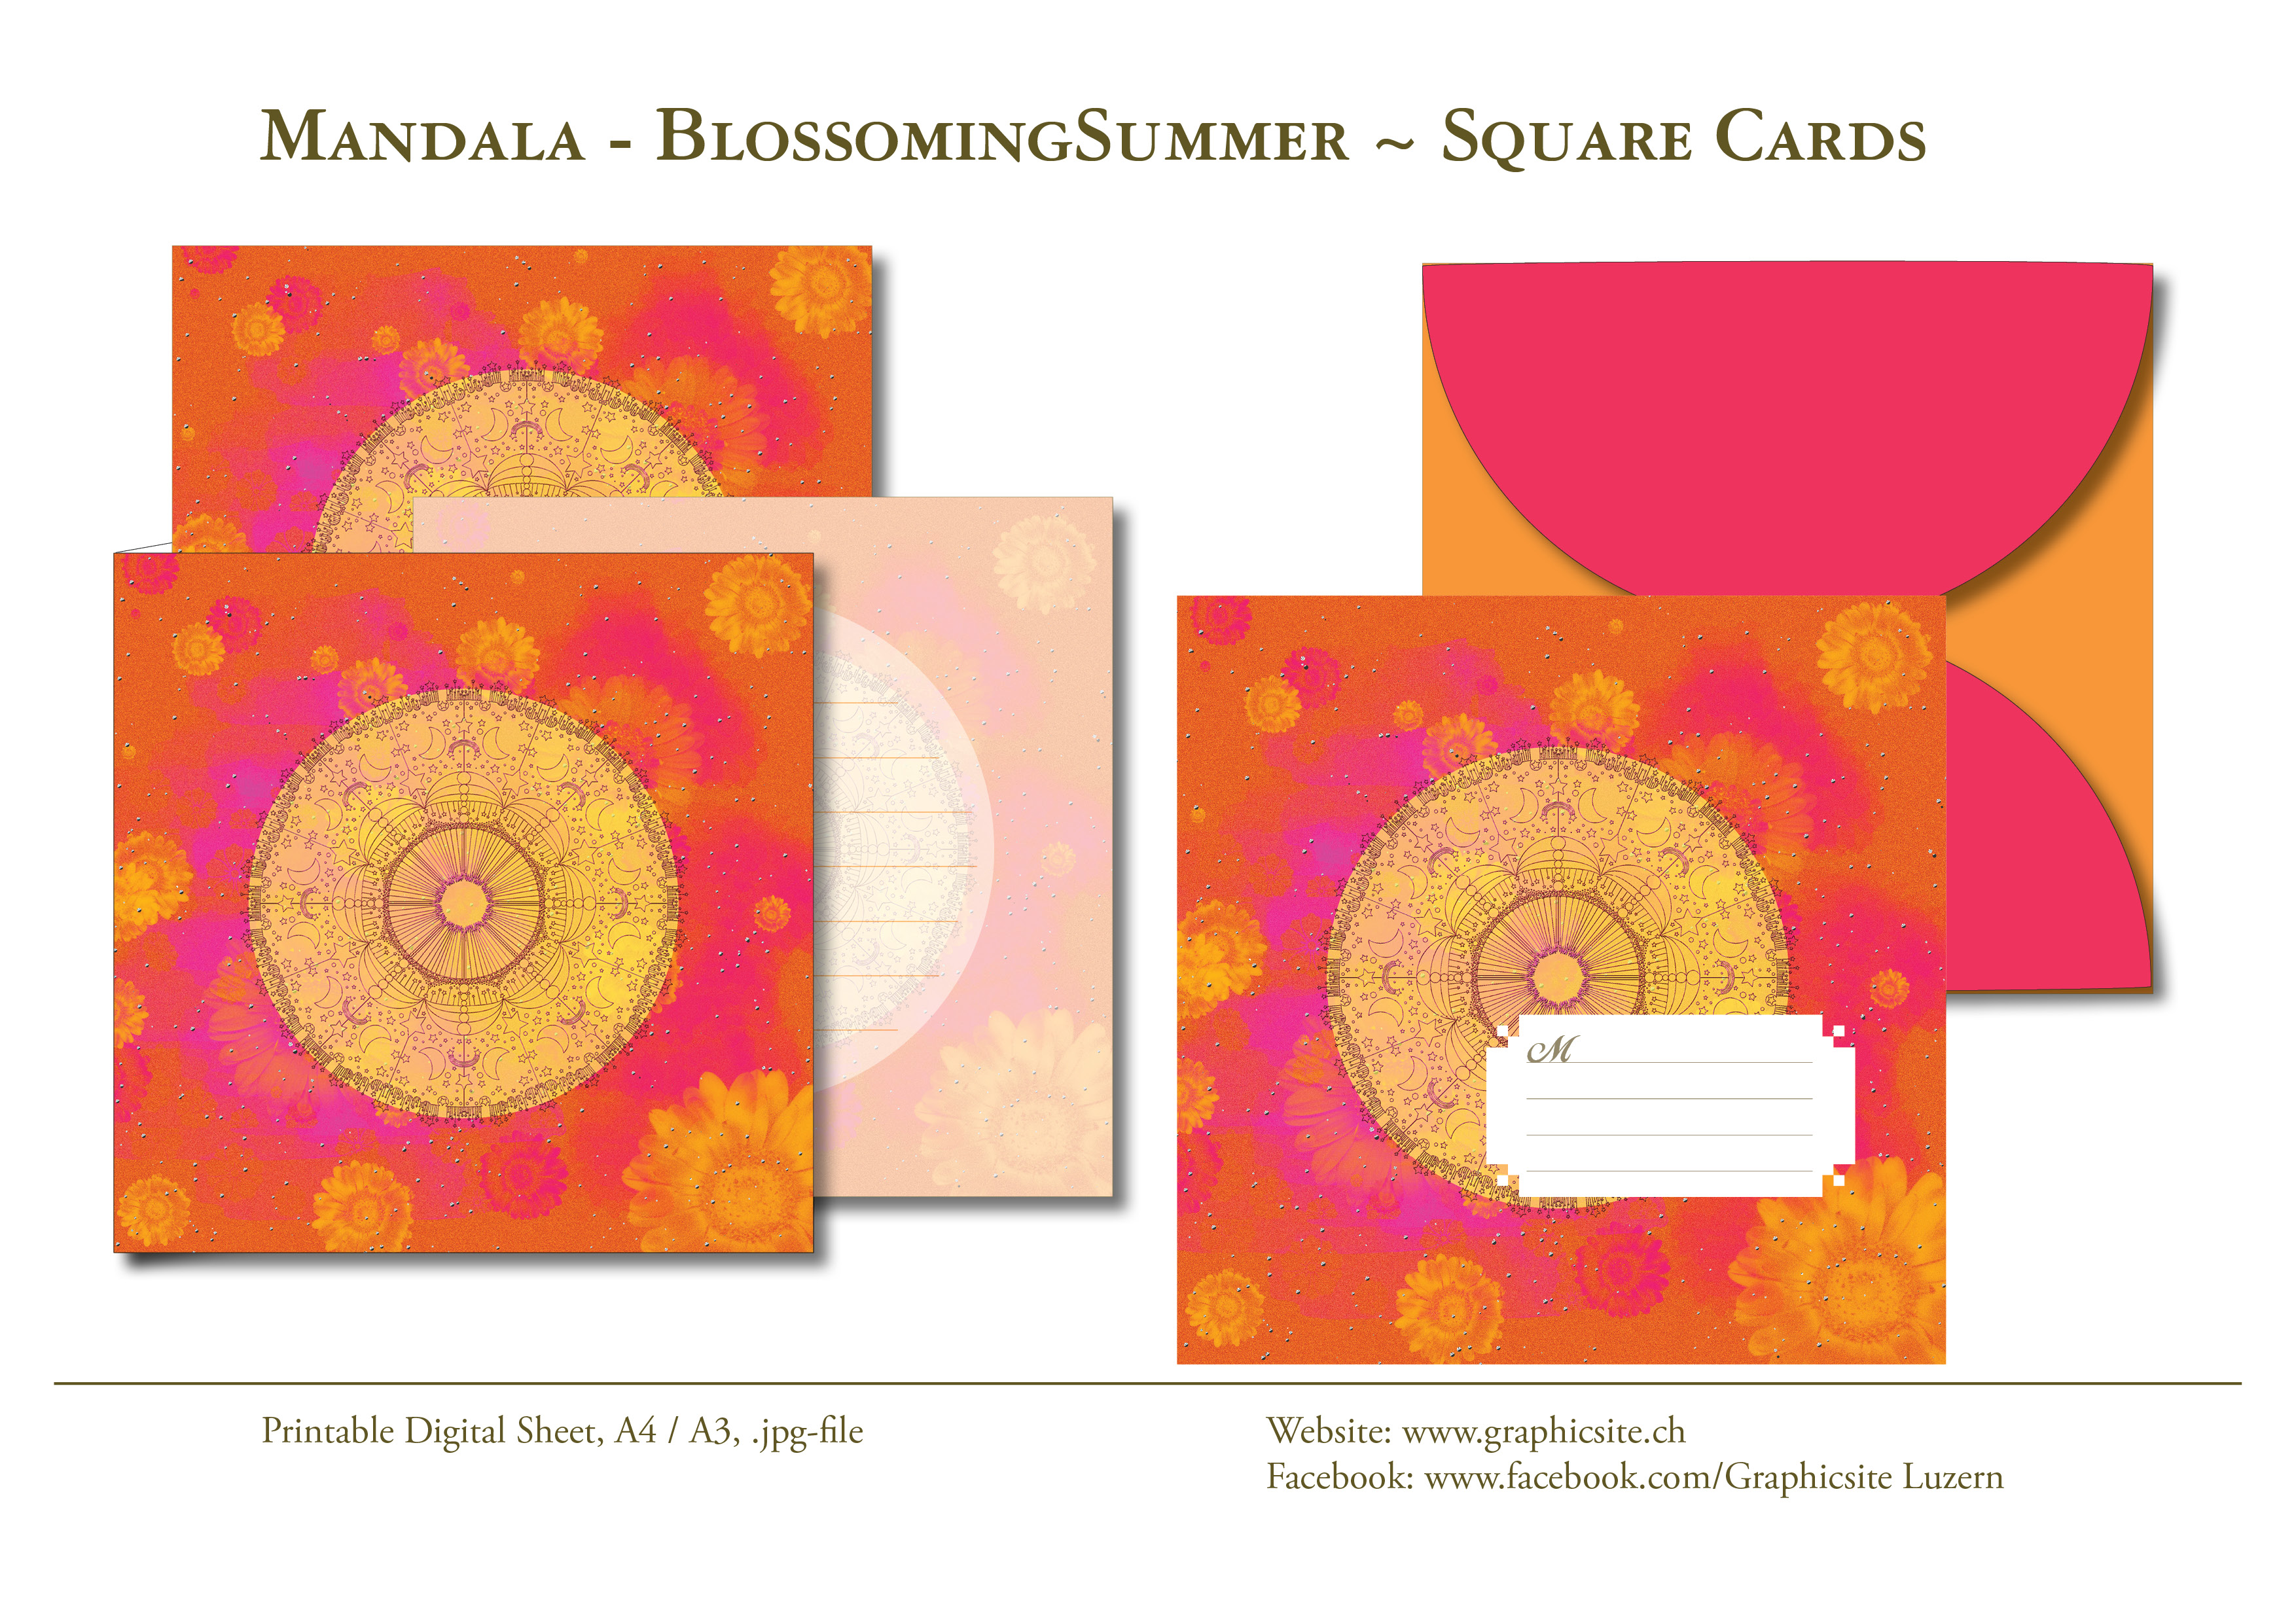 Printable Digital Sheets - Square Cards - MANDALA BlossomingSummer, Greeting Cards, Yoga, Meditation, Cards, Watercolor, Digital painting, Graphic Design, Luzern